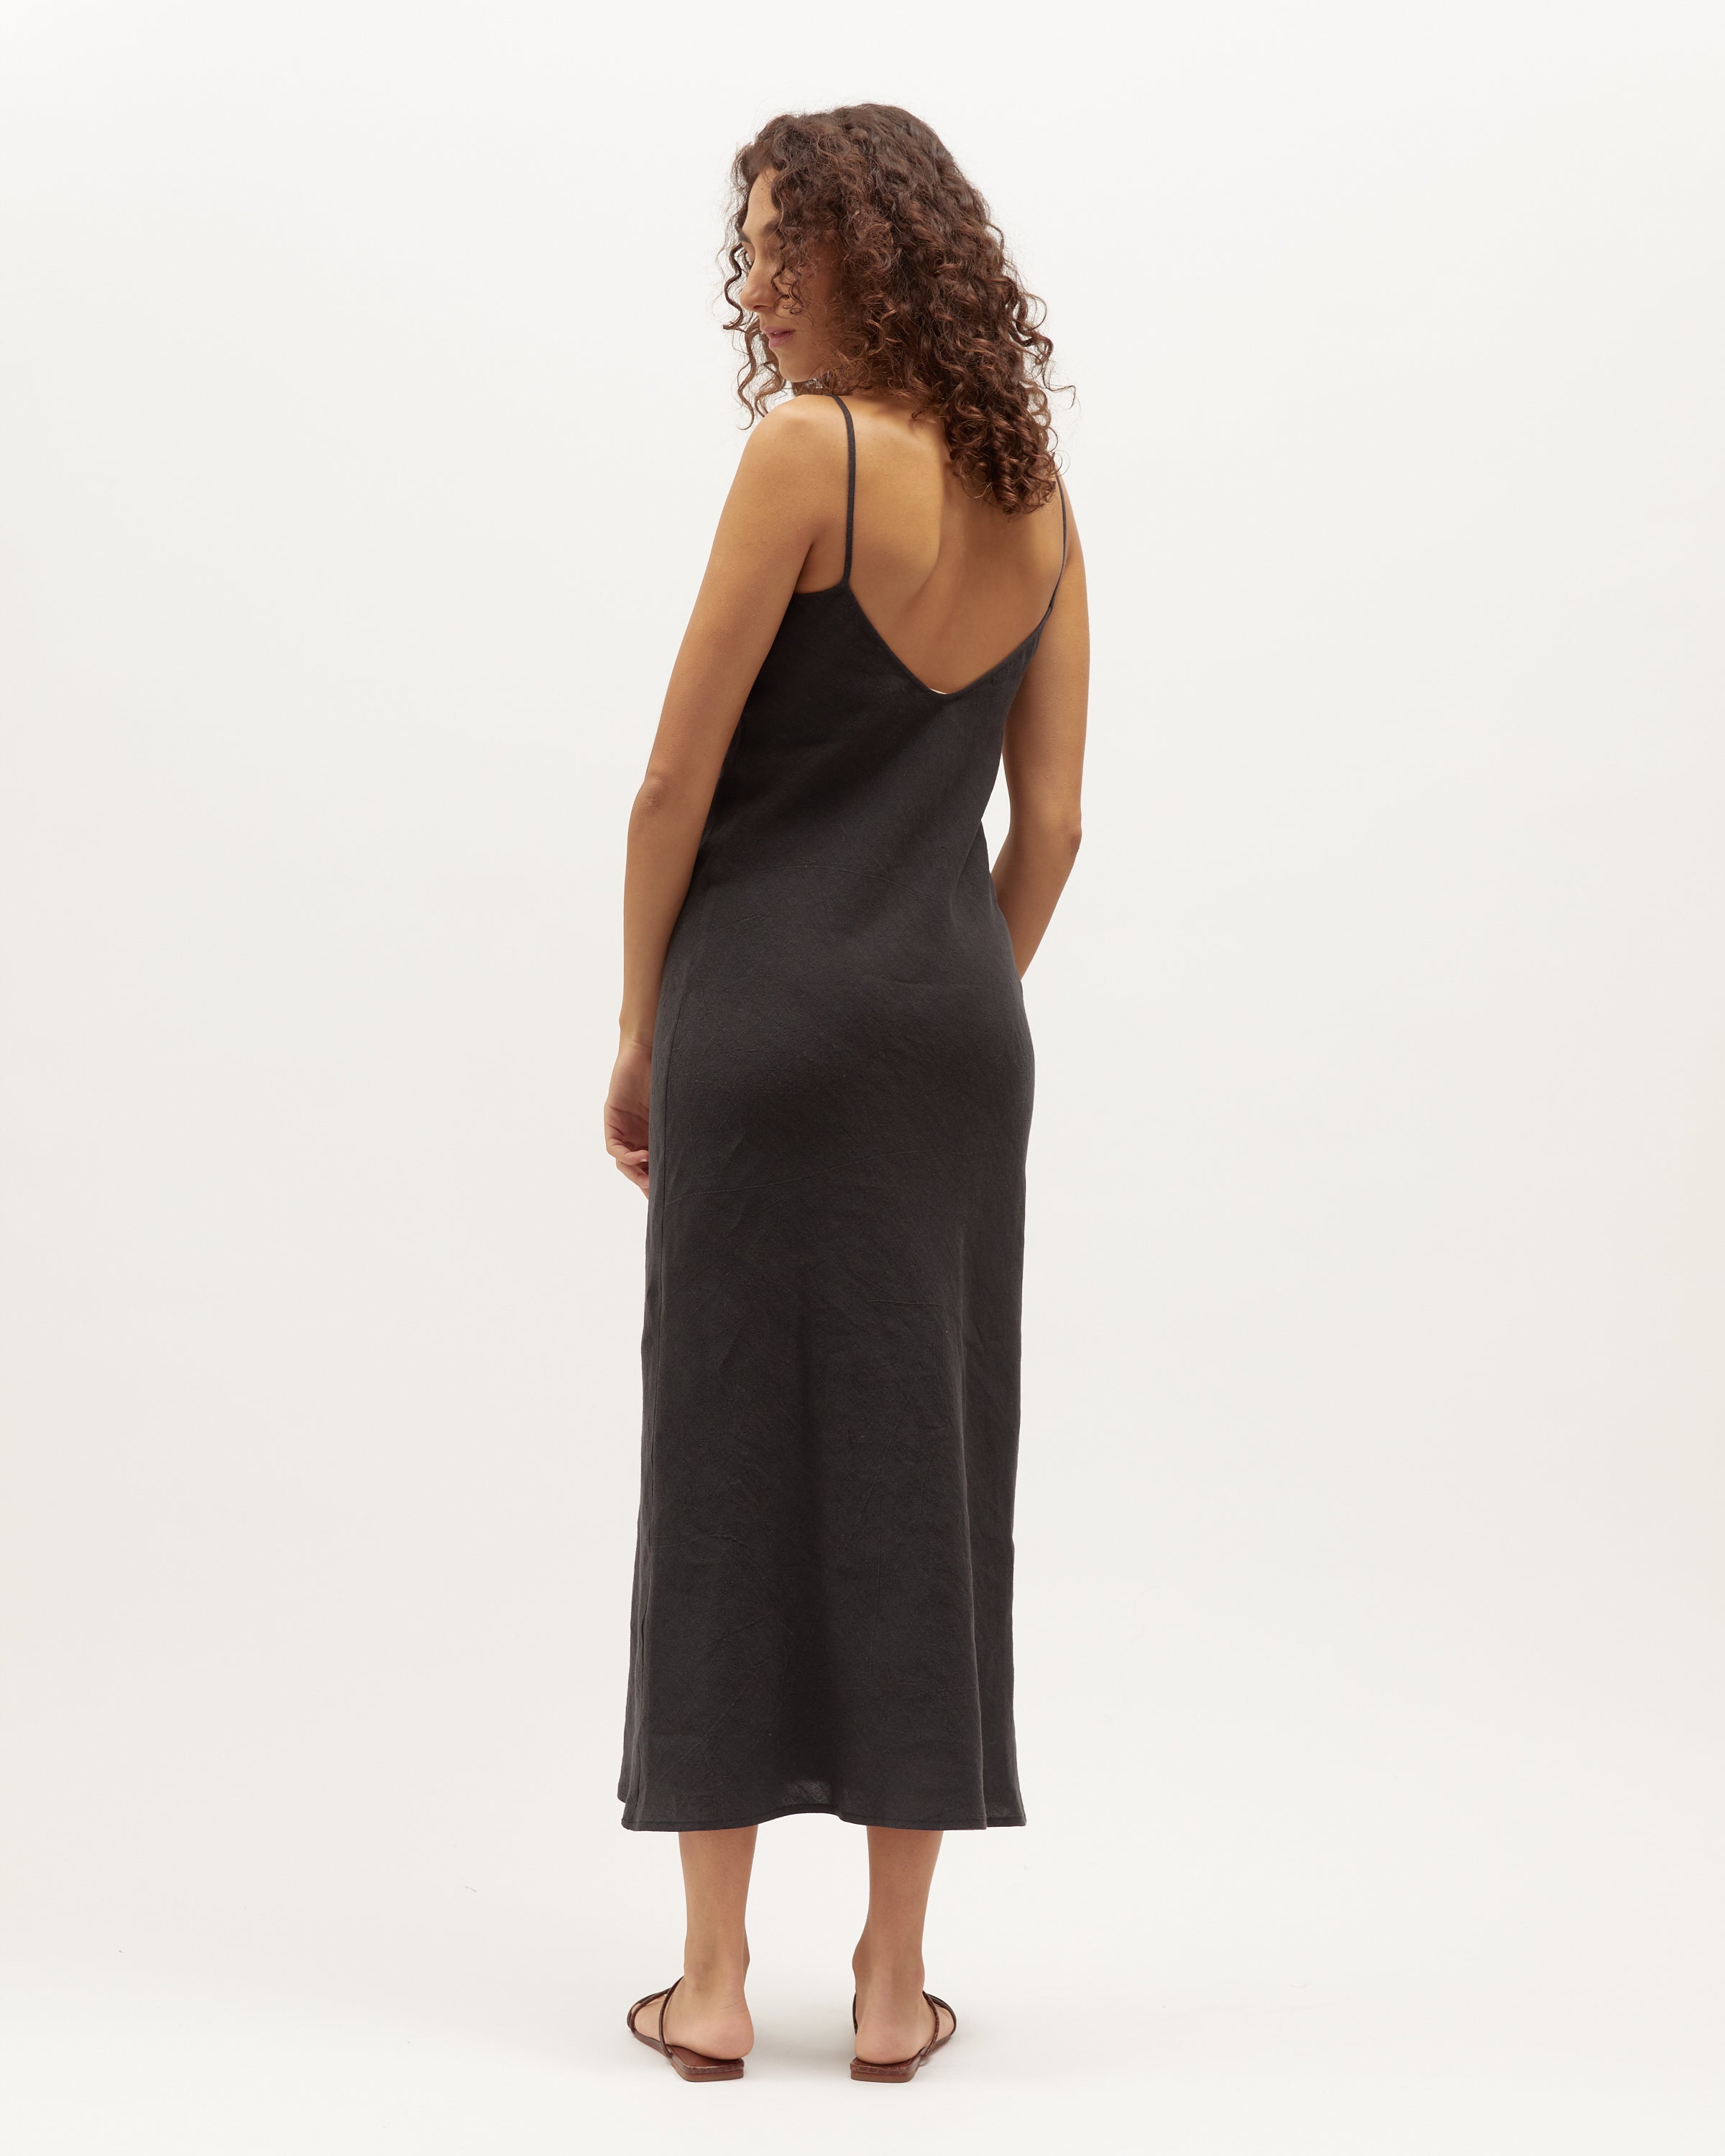 Midi Bias Dress | Black Washed Linen $289